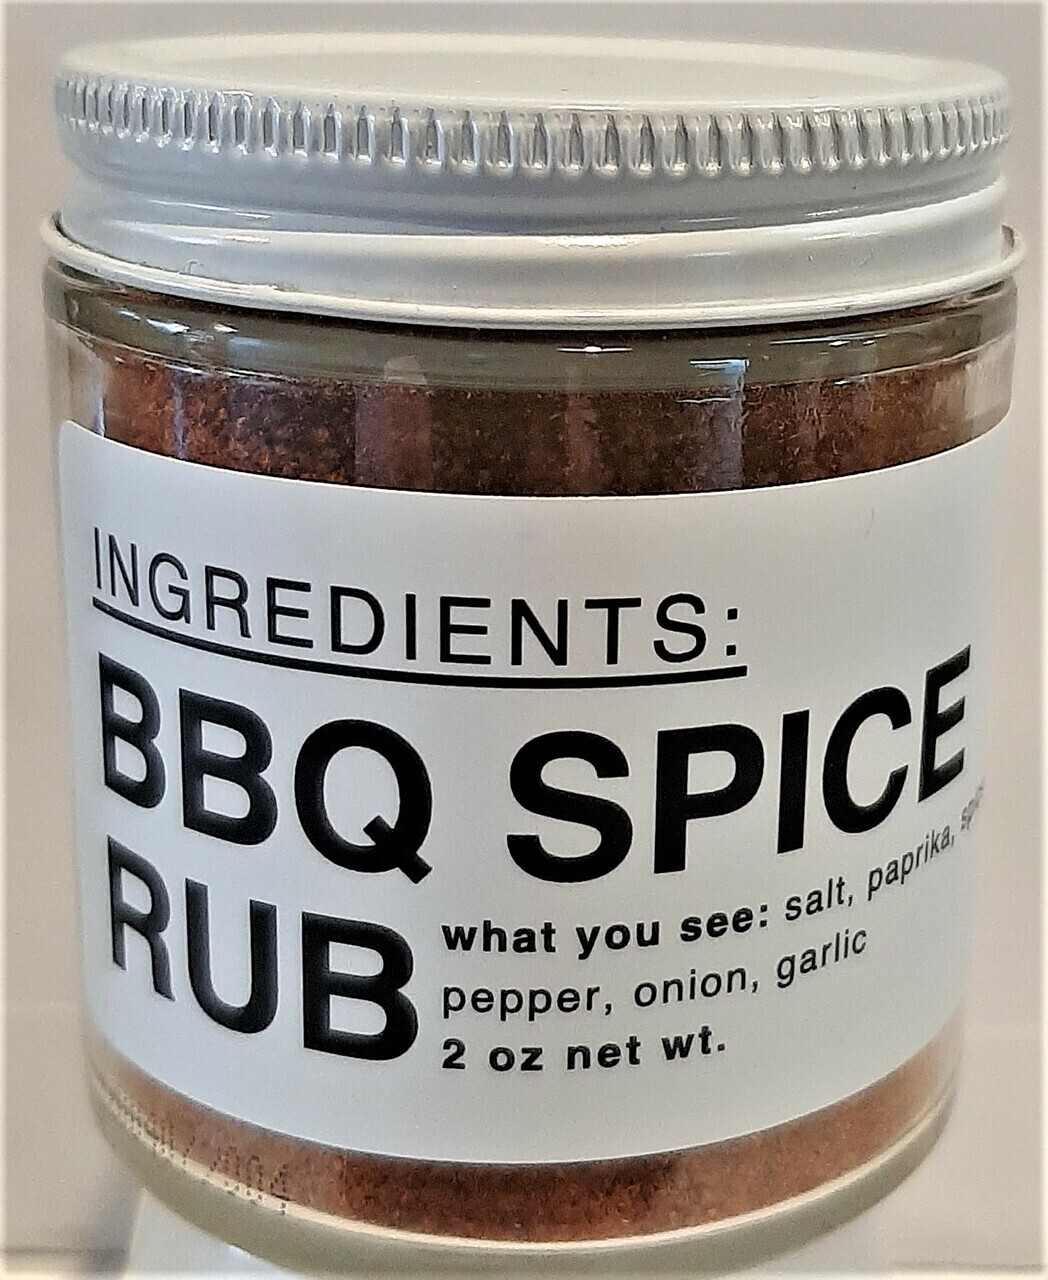 BBQ spice rub